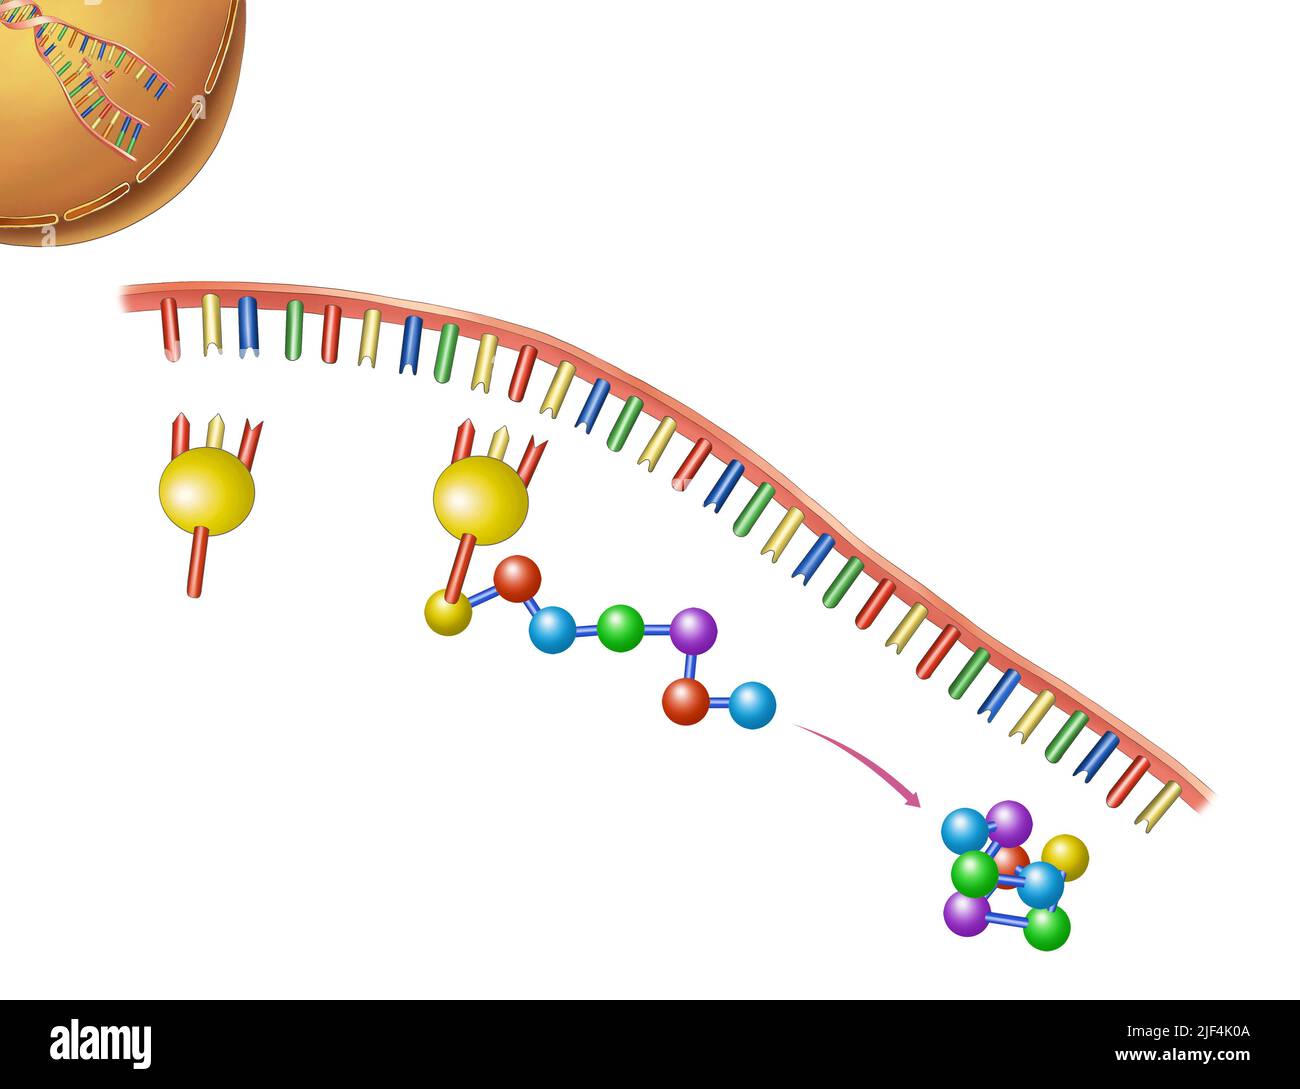 DNA Illustration, Genes of Life Sciences Stock Photo